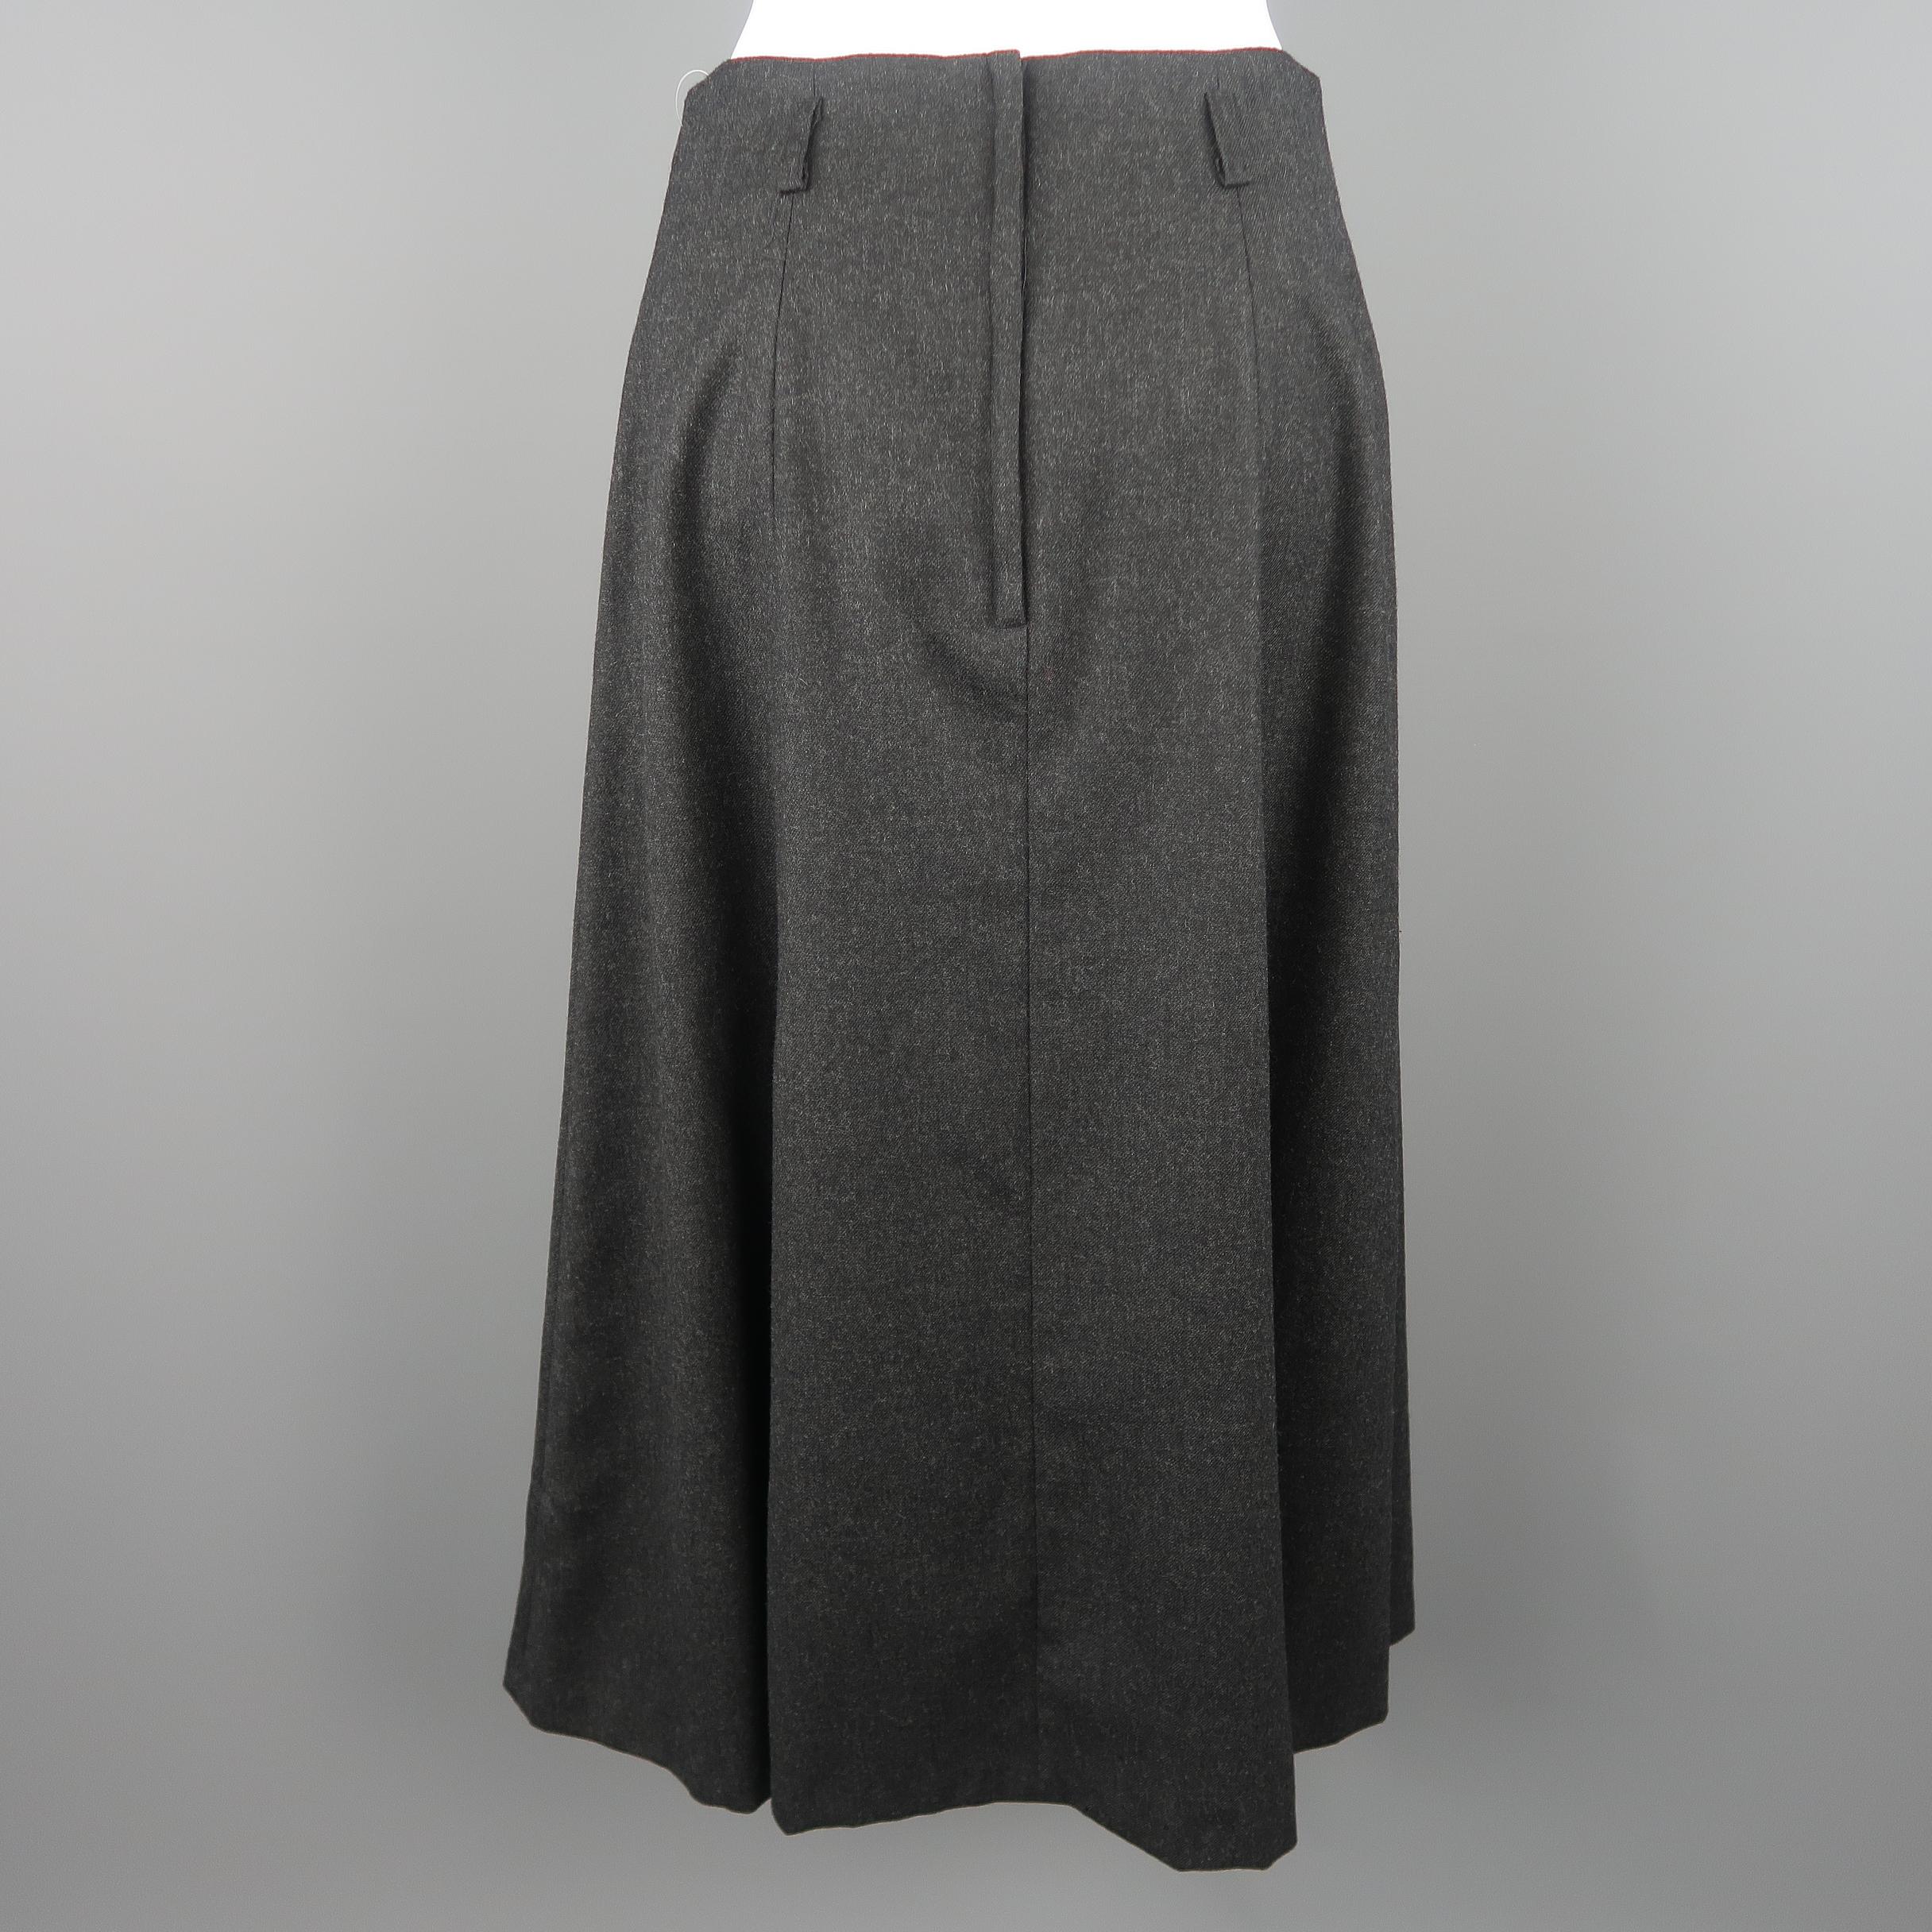 Black Christian Dior Charcoal Wool A-Line Skirt